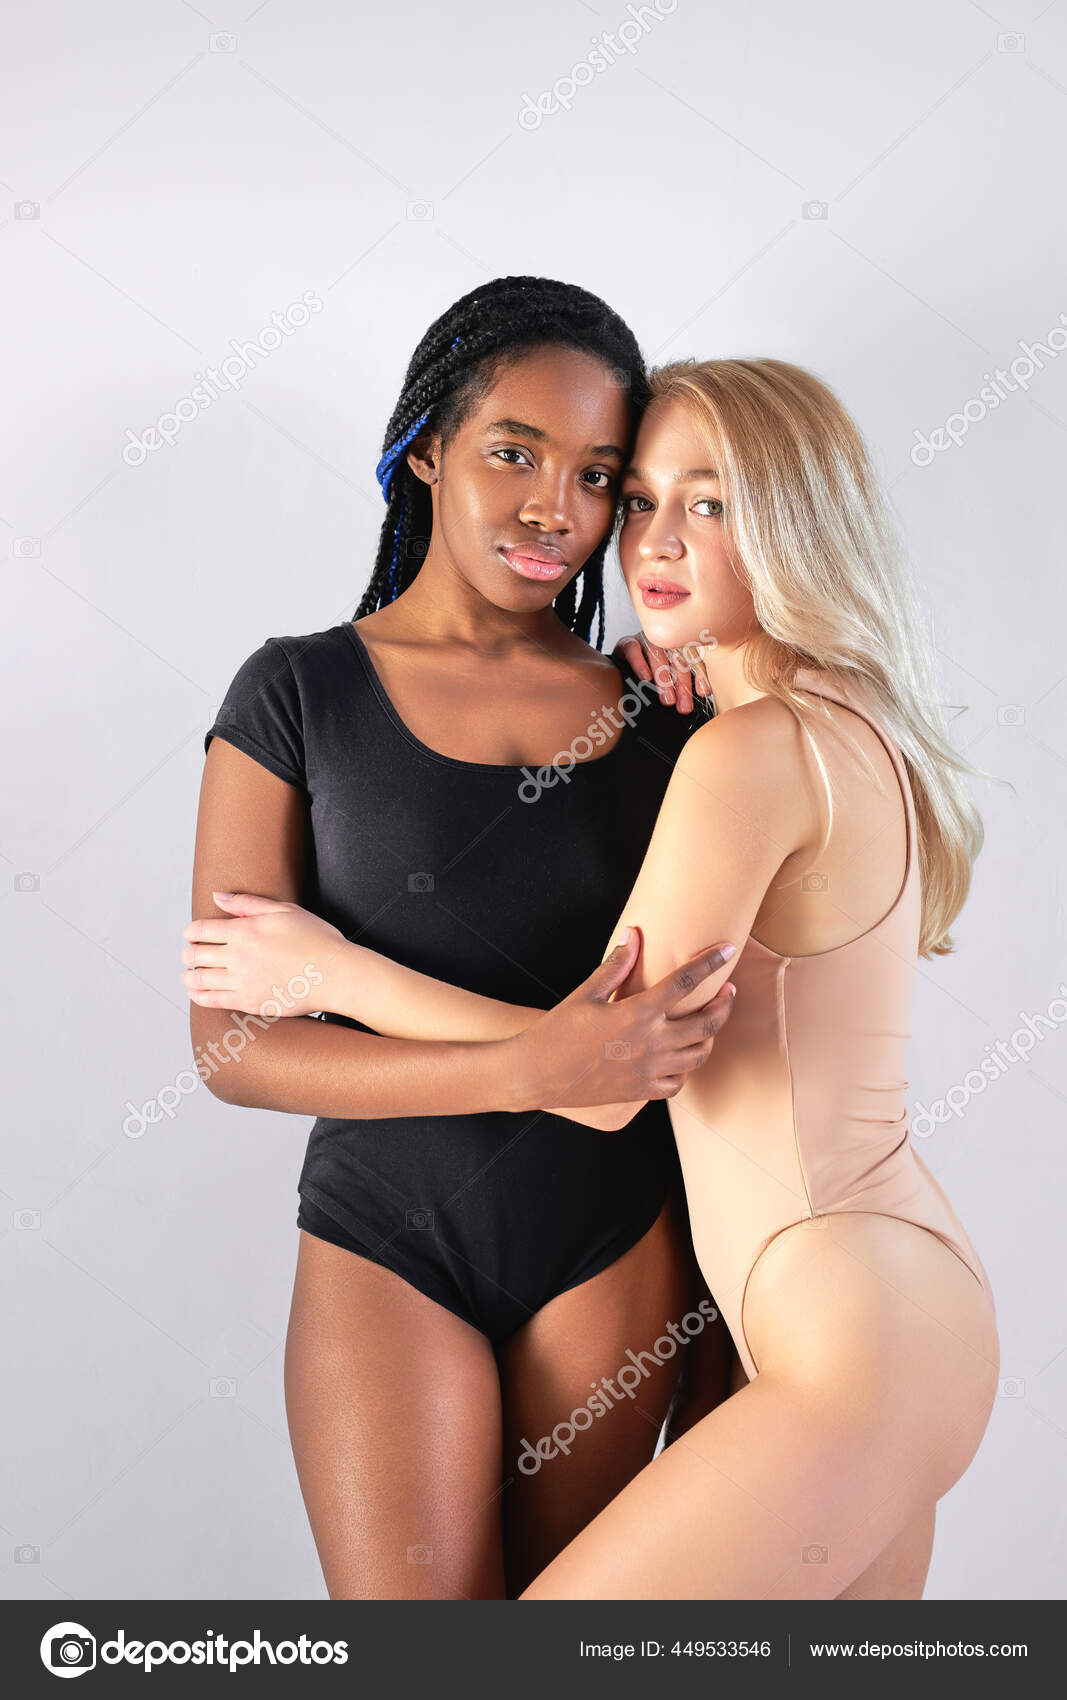 Attractive slim two diverse women in underwear posing hugging each